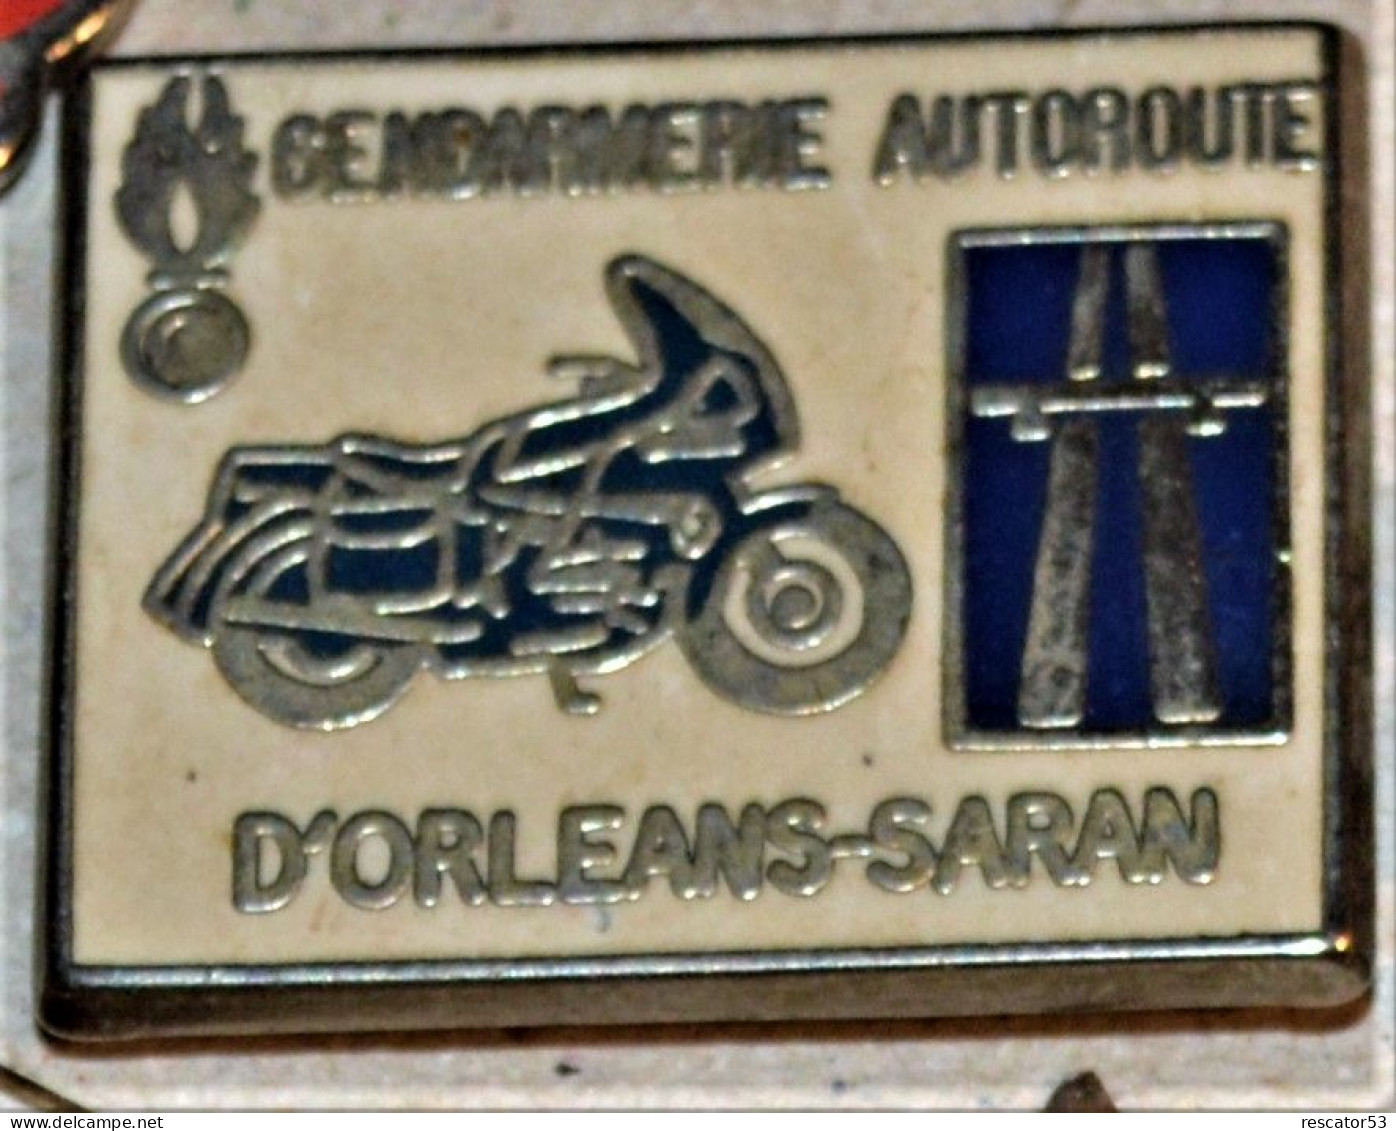 Pin's Gendarmerie Autoroute Orléans-Saran - Police & Gendarmerie